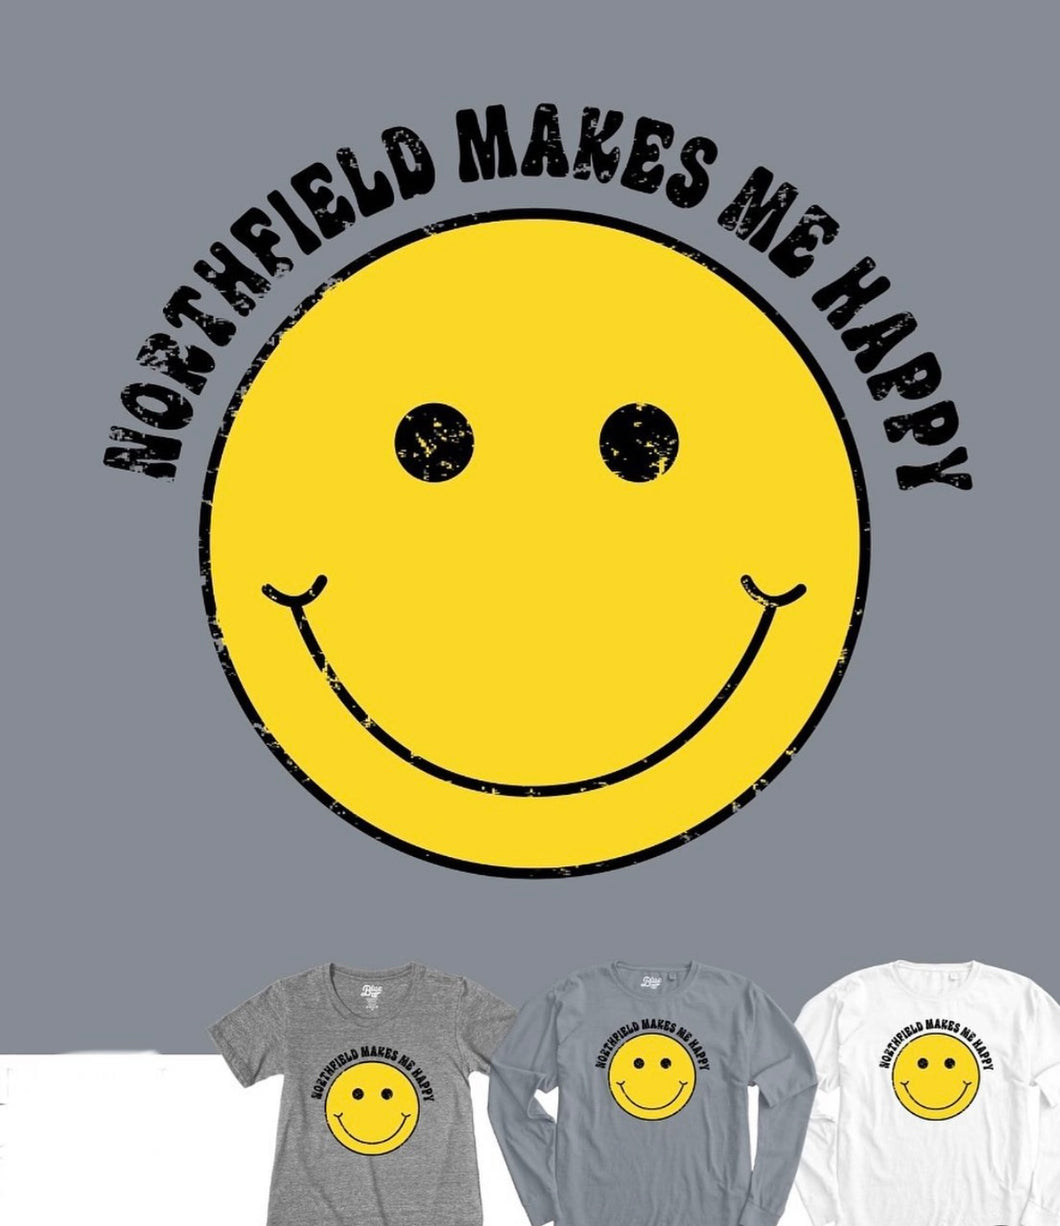 Lakeshirts Northfield Makes Me Happy T-Shirt